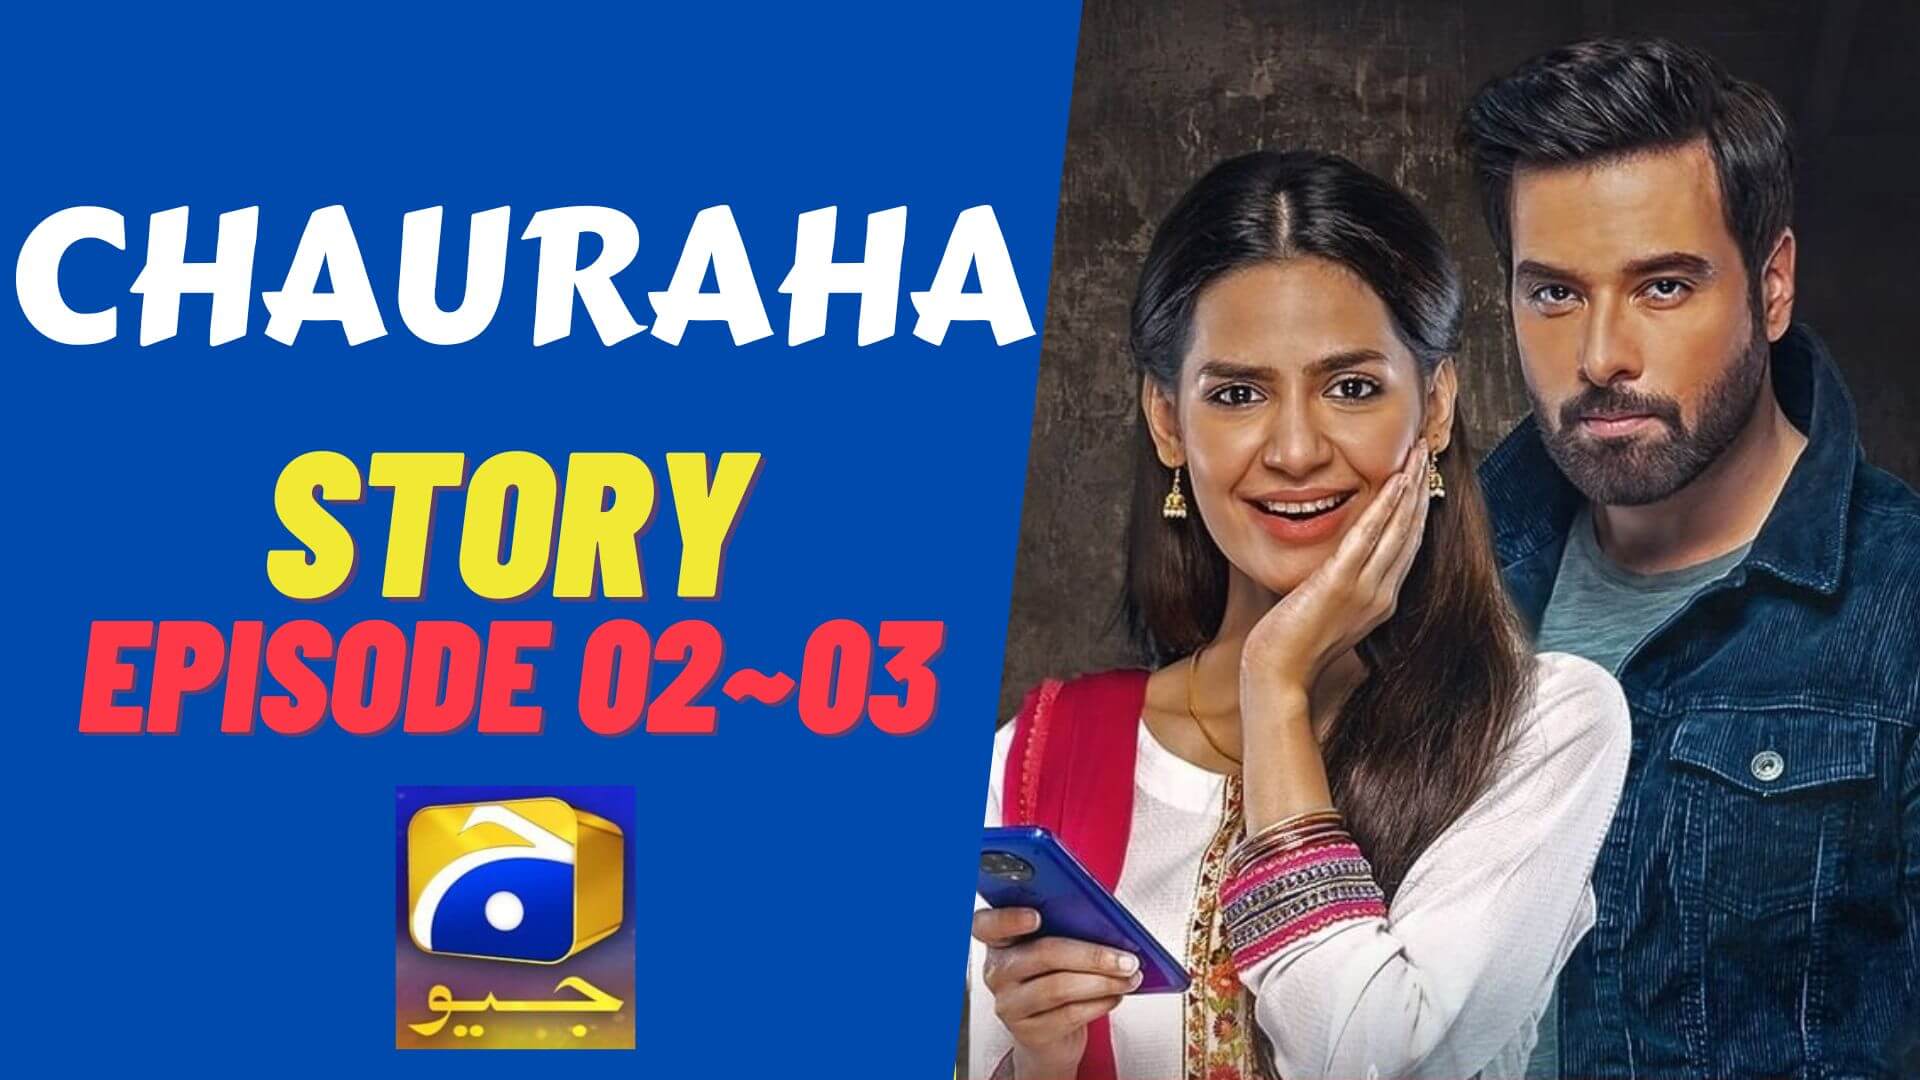 Chauraha Episode 02_03 Story